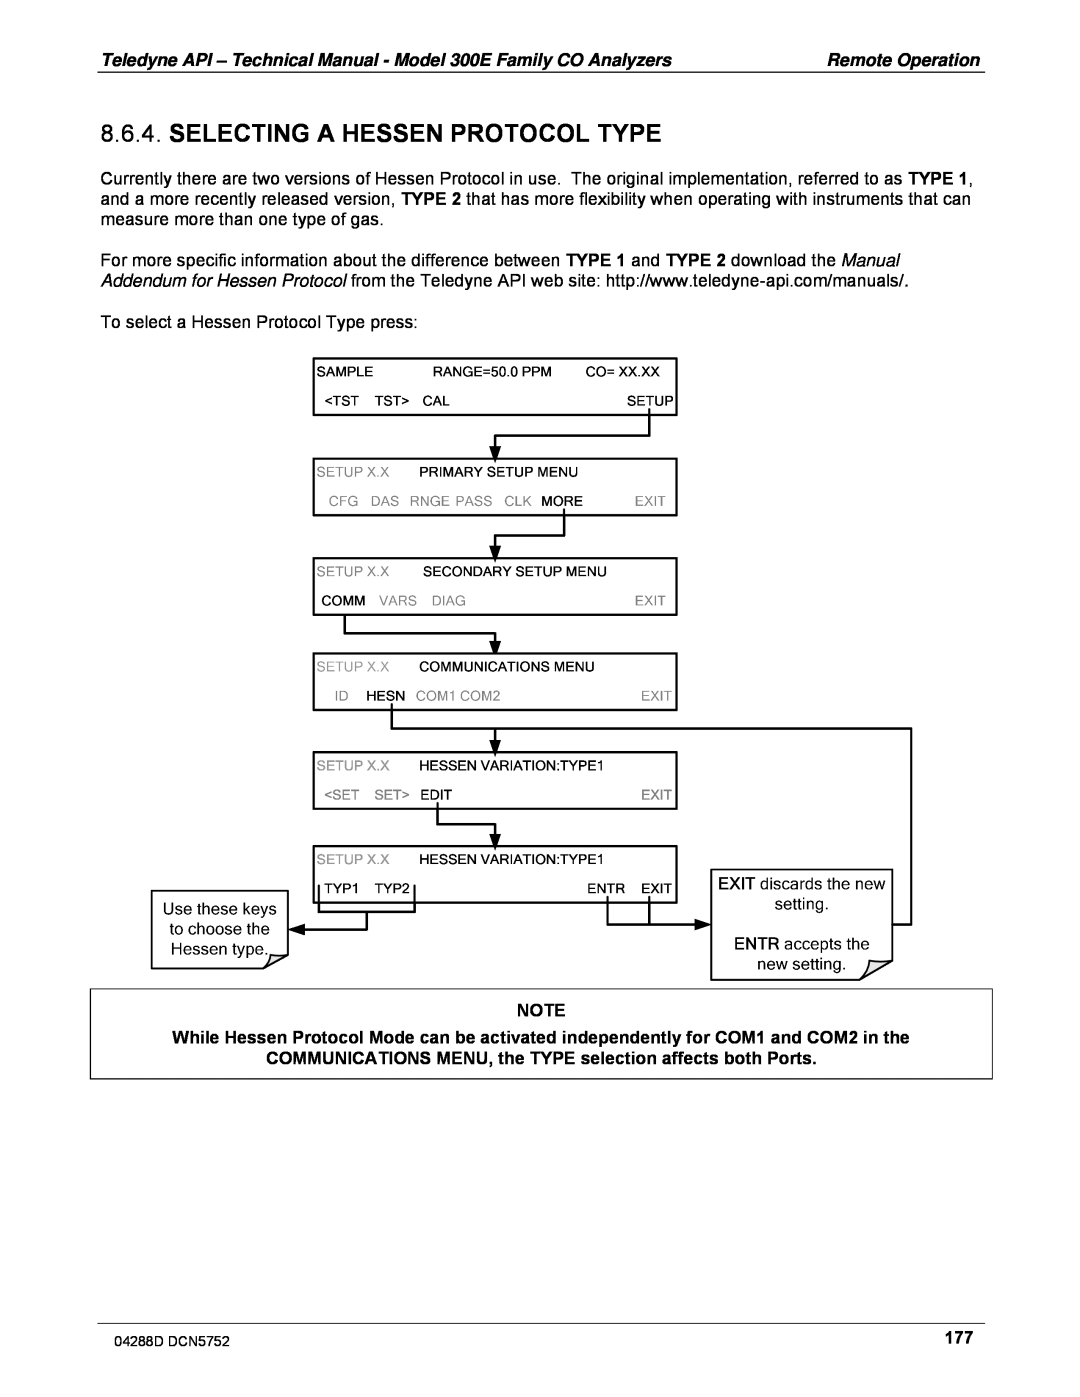 Teledyne M300EM operation manual Selecting A Hessen Protocol Type 